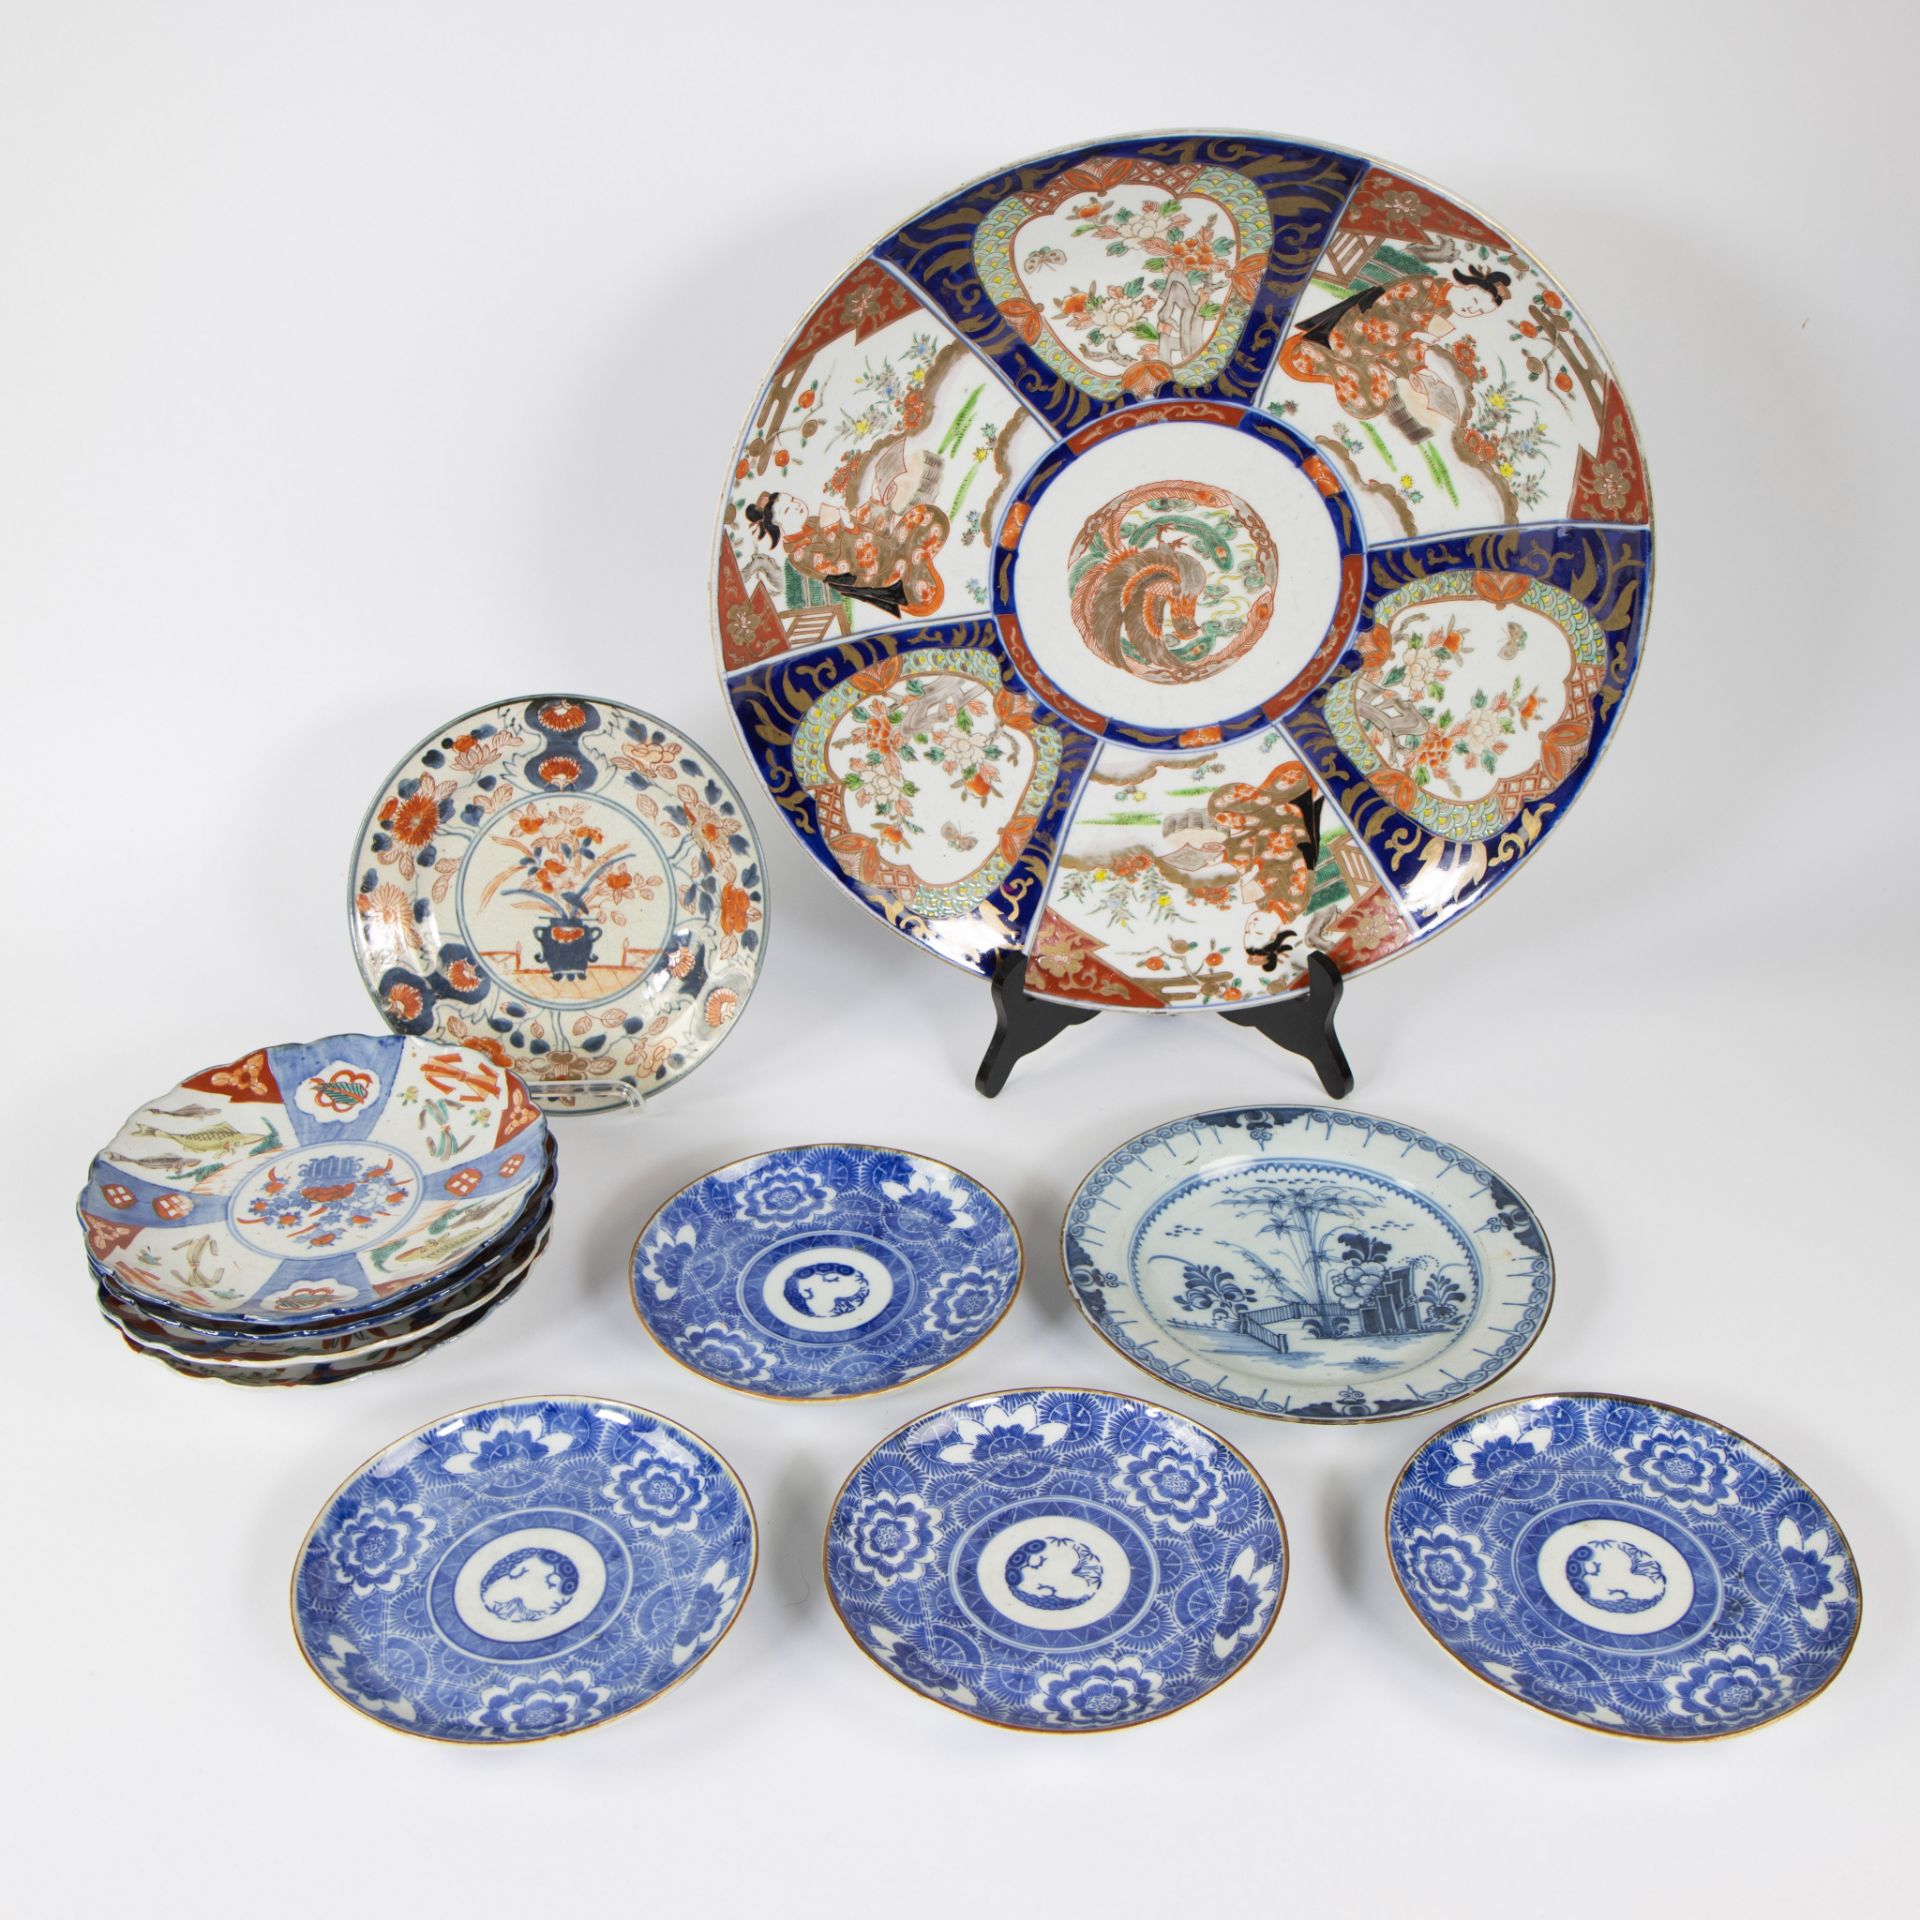 Lot Japanese and Chinese plates (11) blue/white and Imari